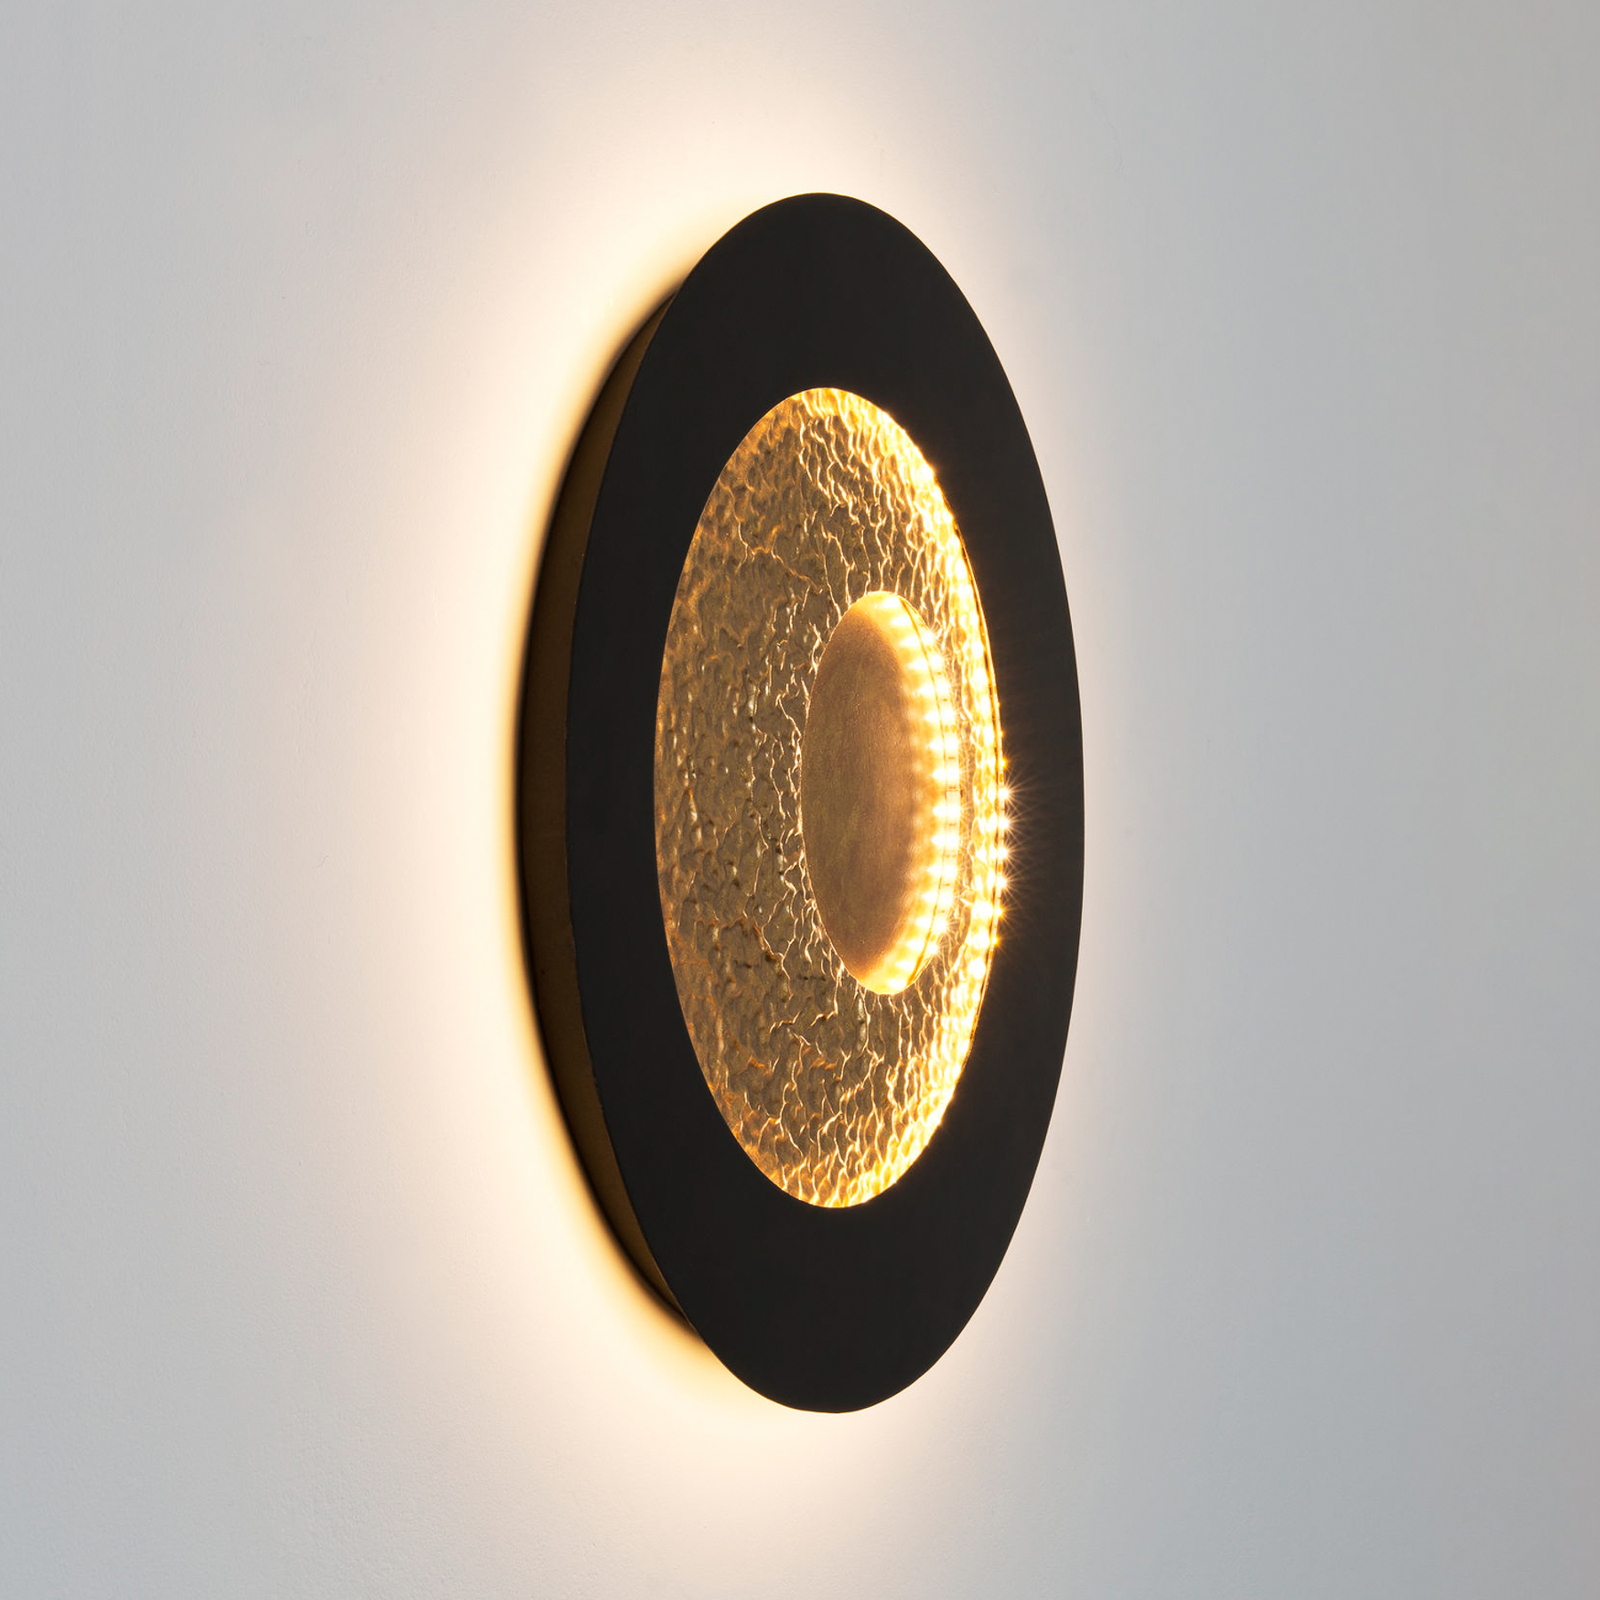 Urano LED wandlamp, bruin-zwart/goud, Ø 60 cm, ijzer